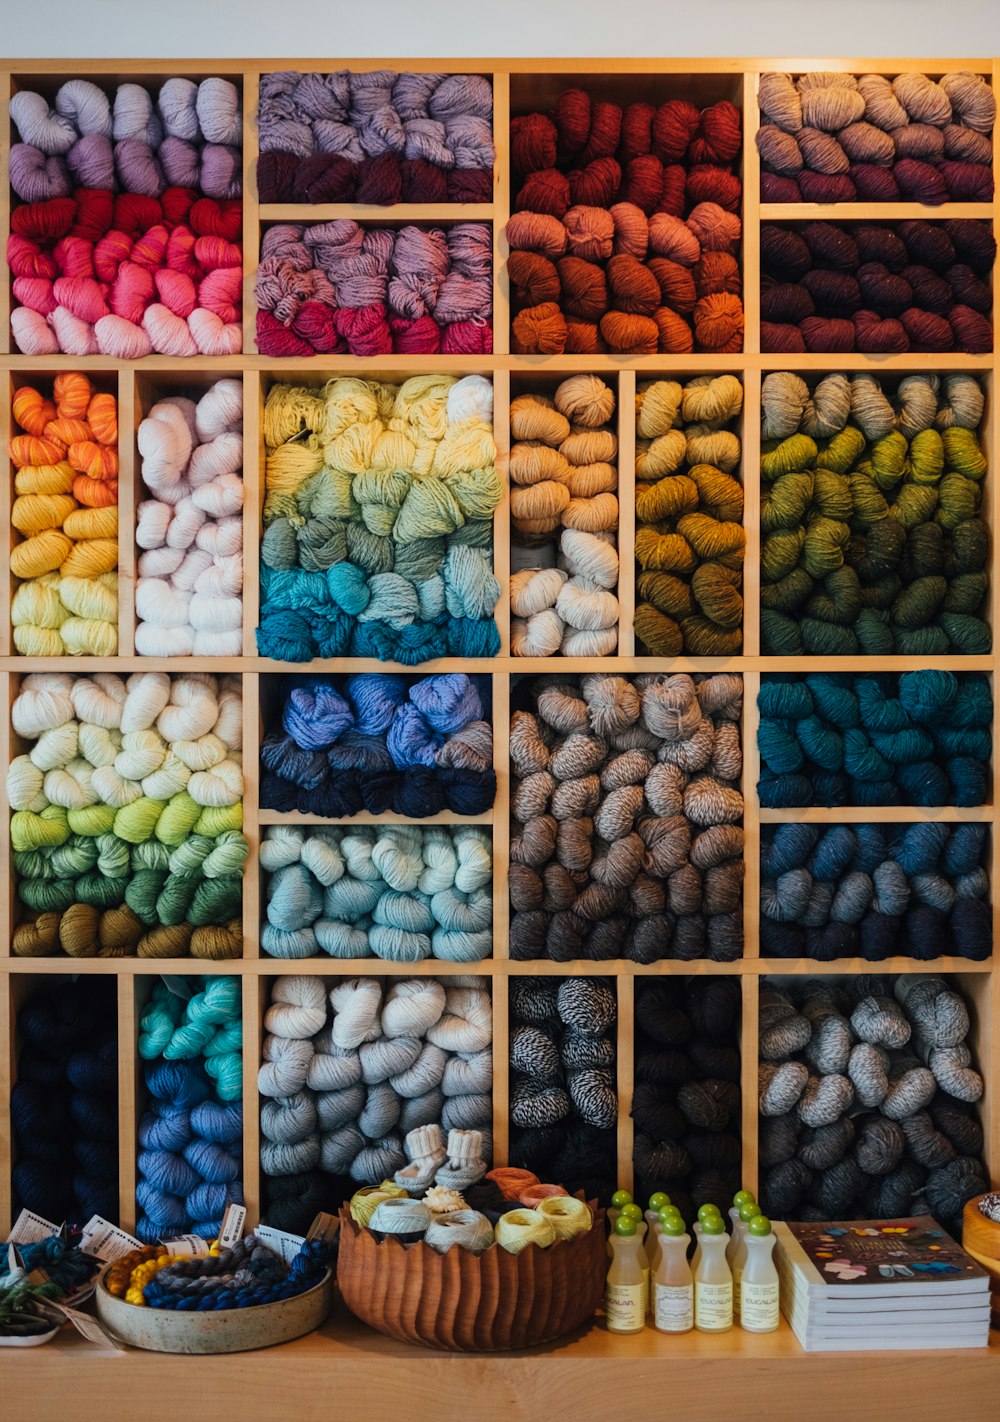 Textiles de colores variados